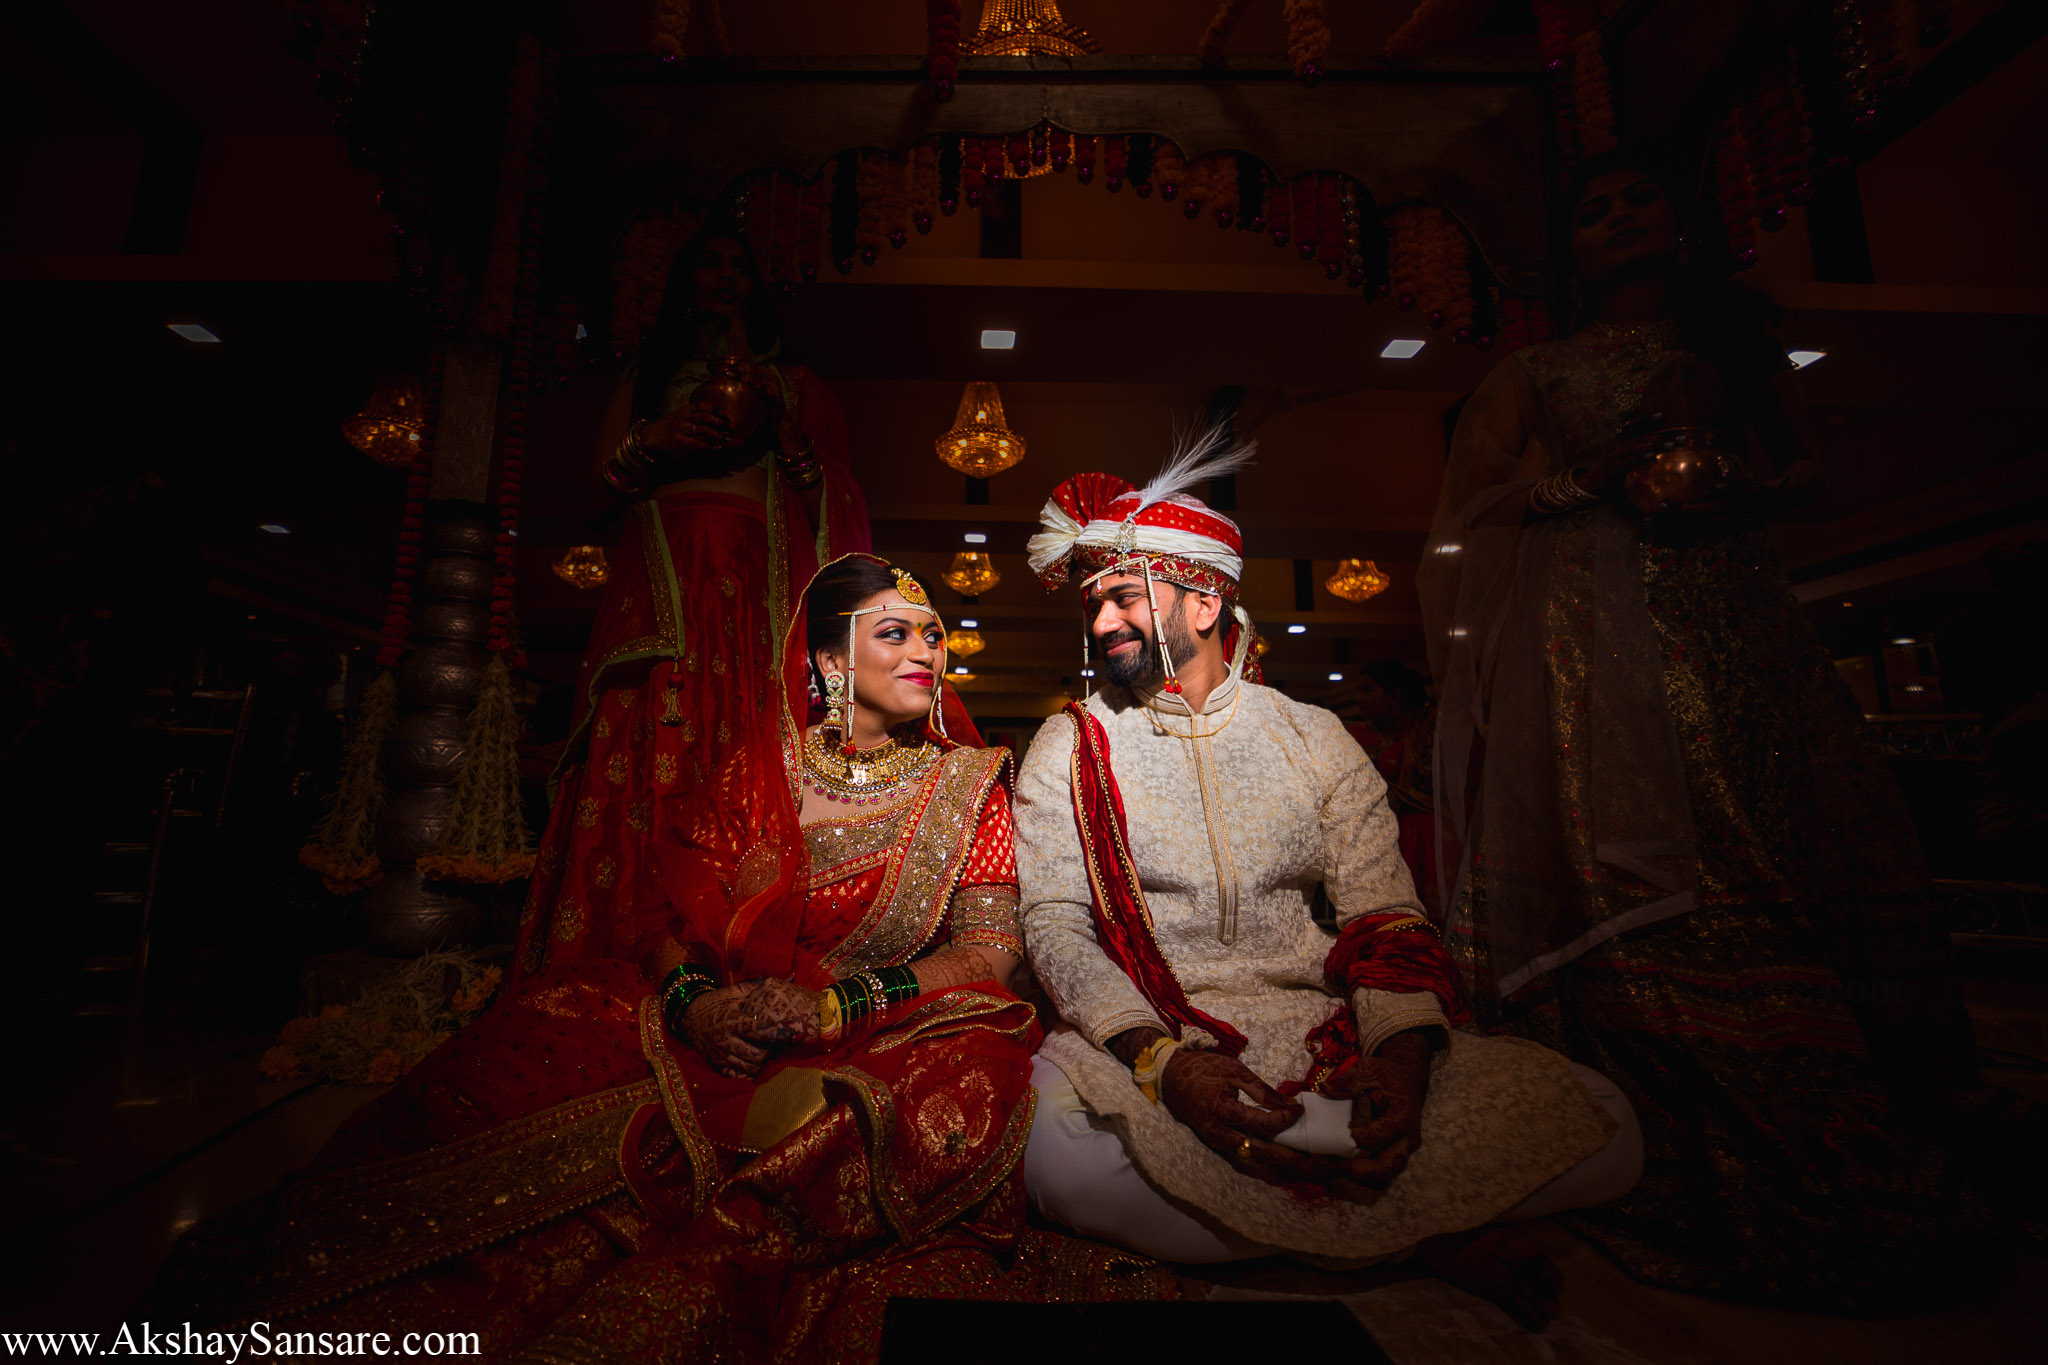 Ajay & Devika Akshay Sansare Photography Best Candid wedding photographer in mumbai india22.jpg